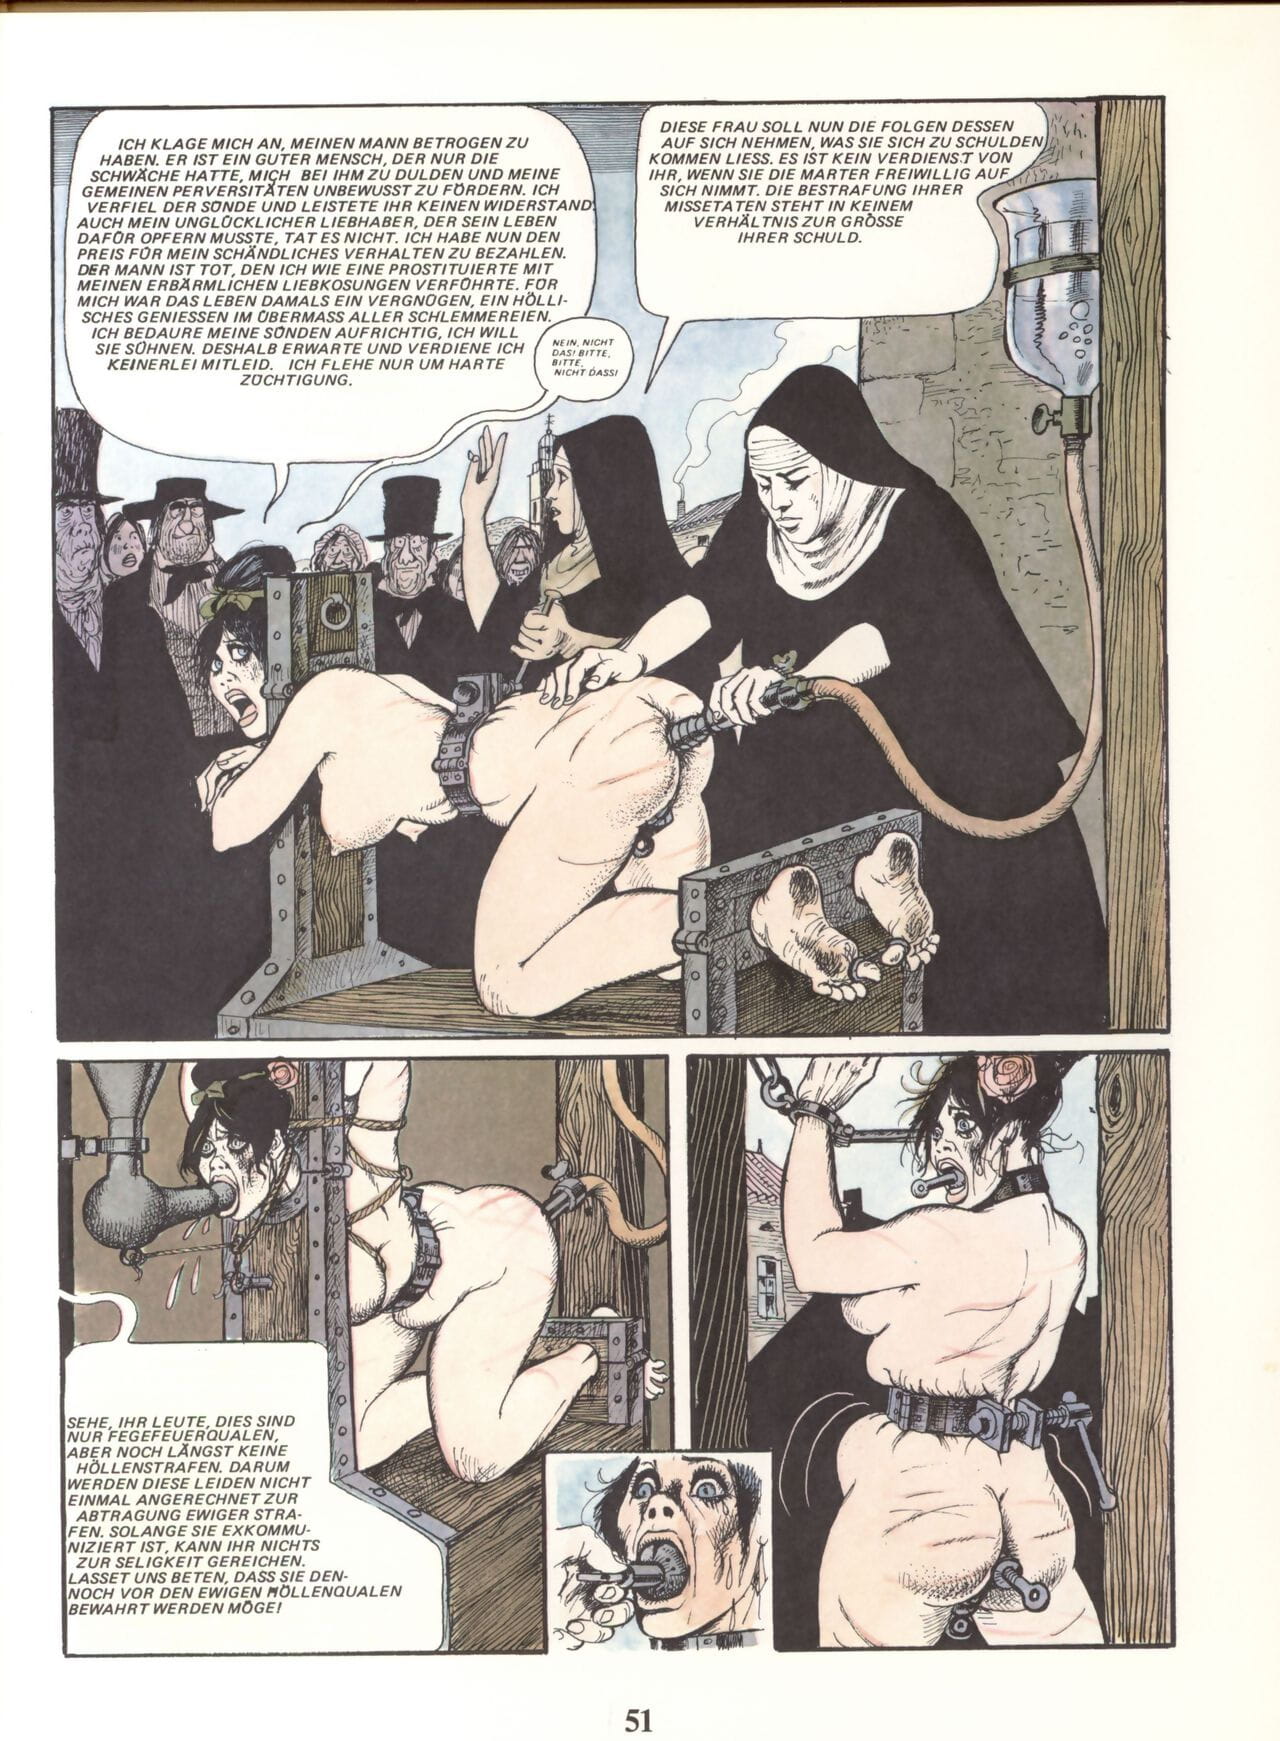 Marie Gabriel De St eutropa #02 część 3 page 1